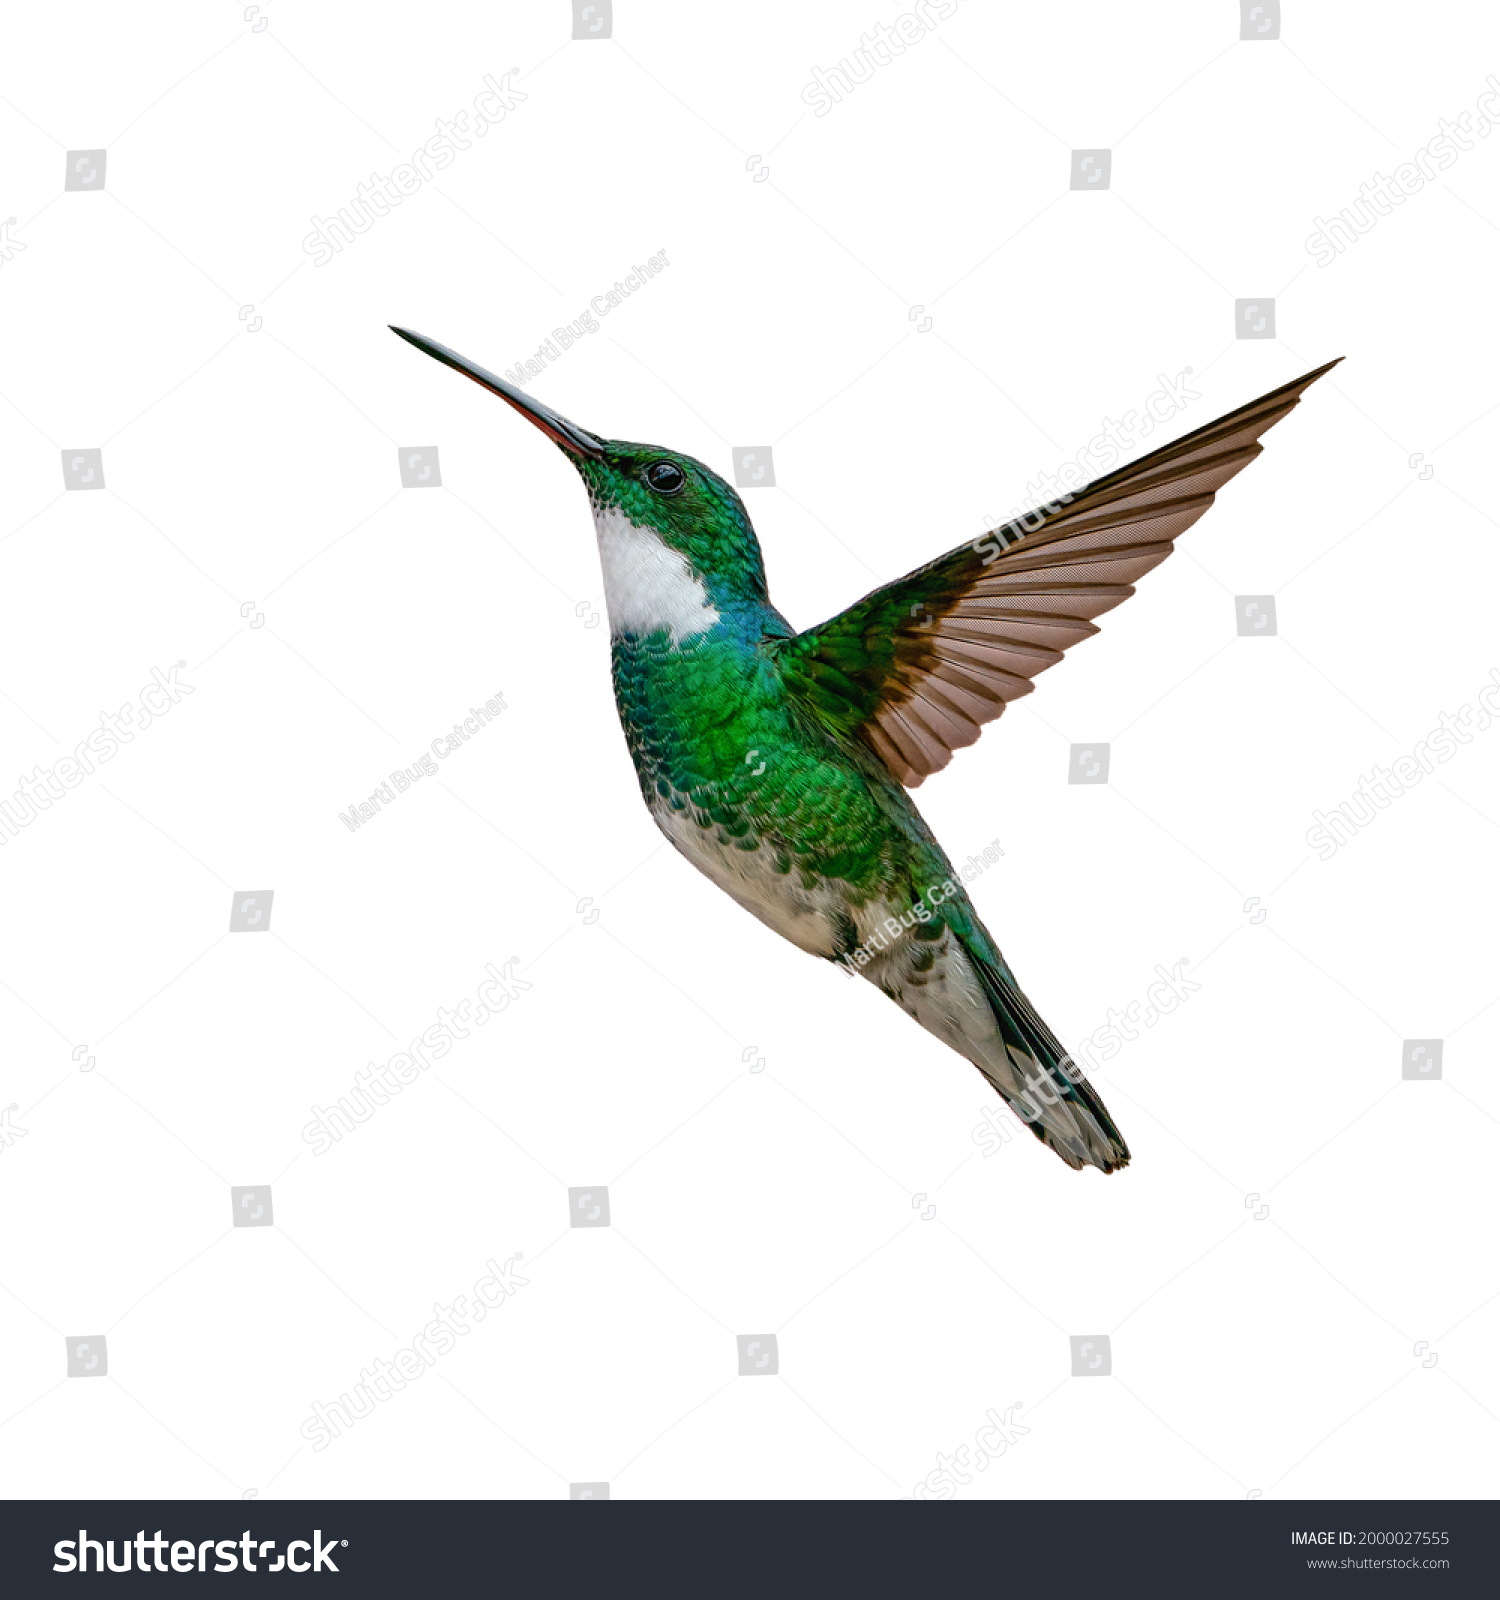 Flying hummingbird isolated on white background #2000027555